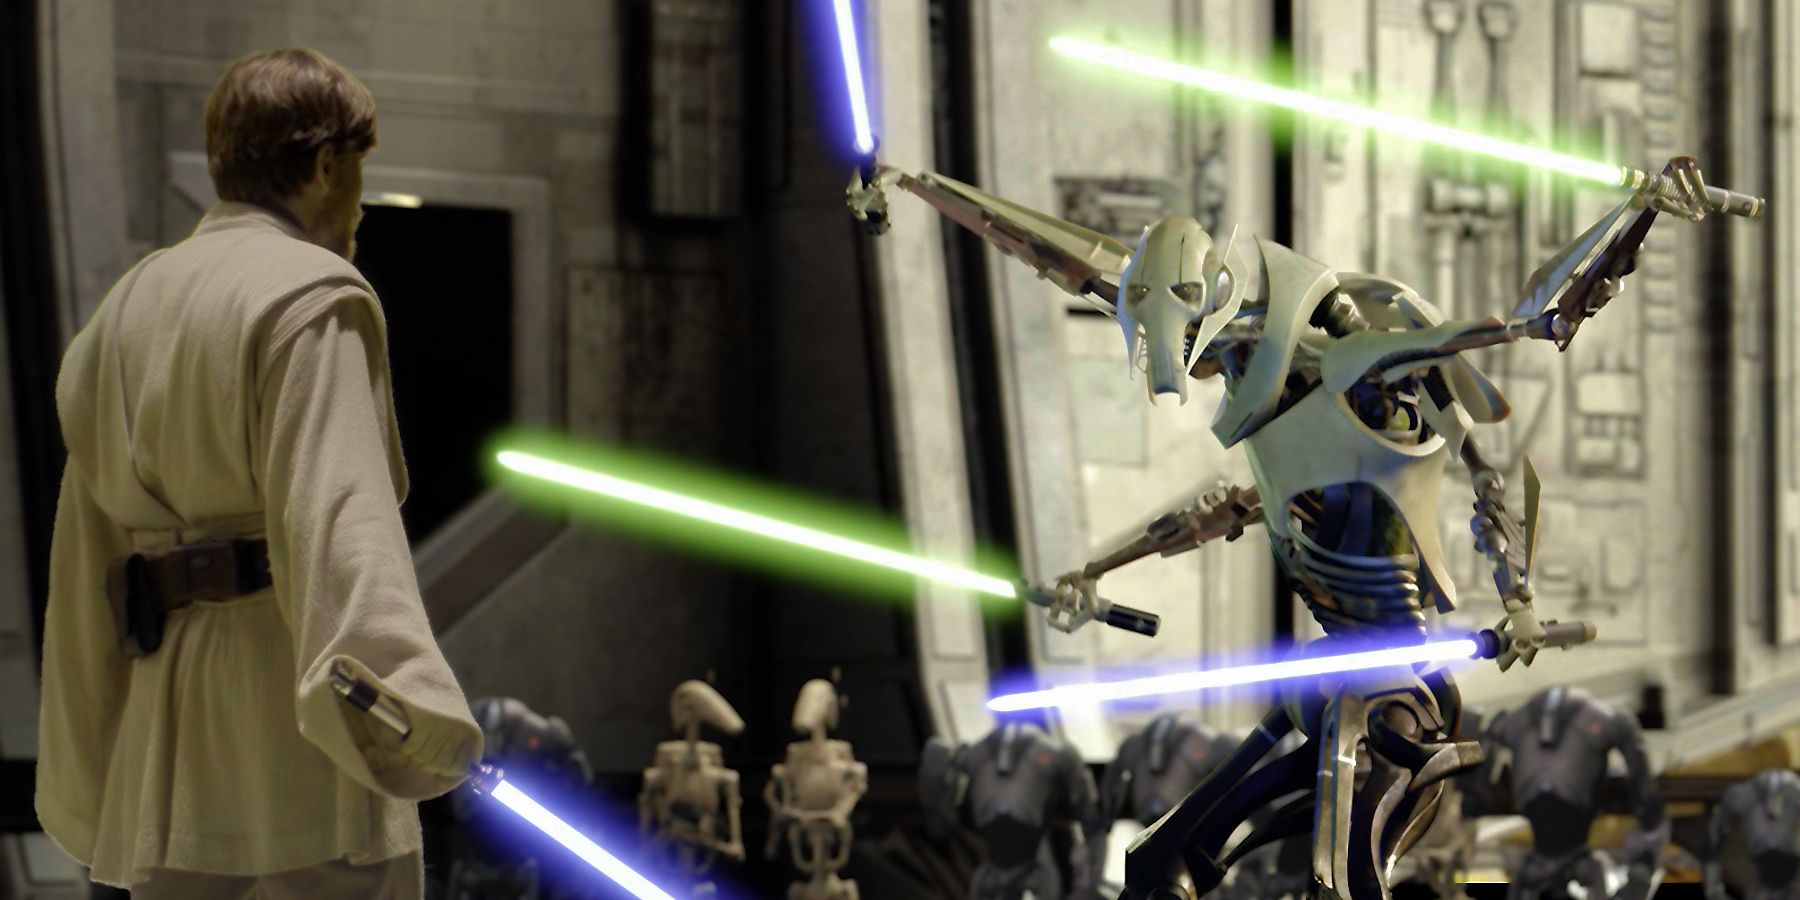 Obi Wan Kenobi beginning a battle with General Grievous in Star Wars Revenge Of The Sith